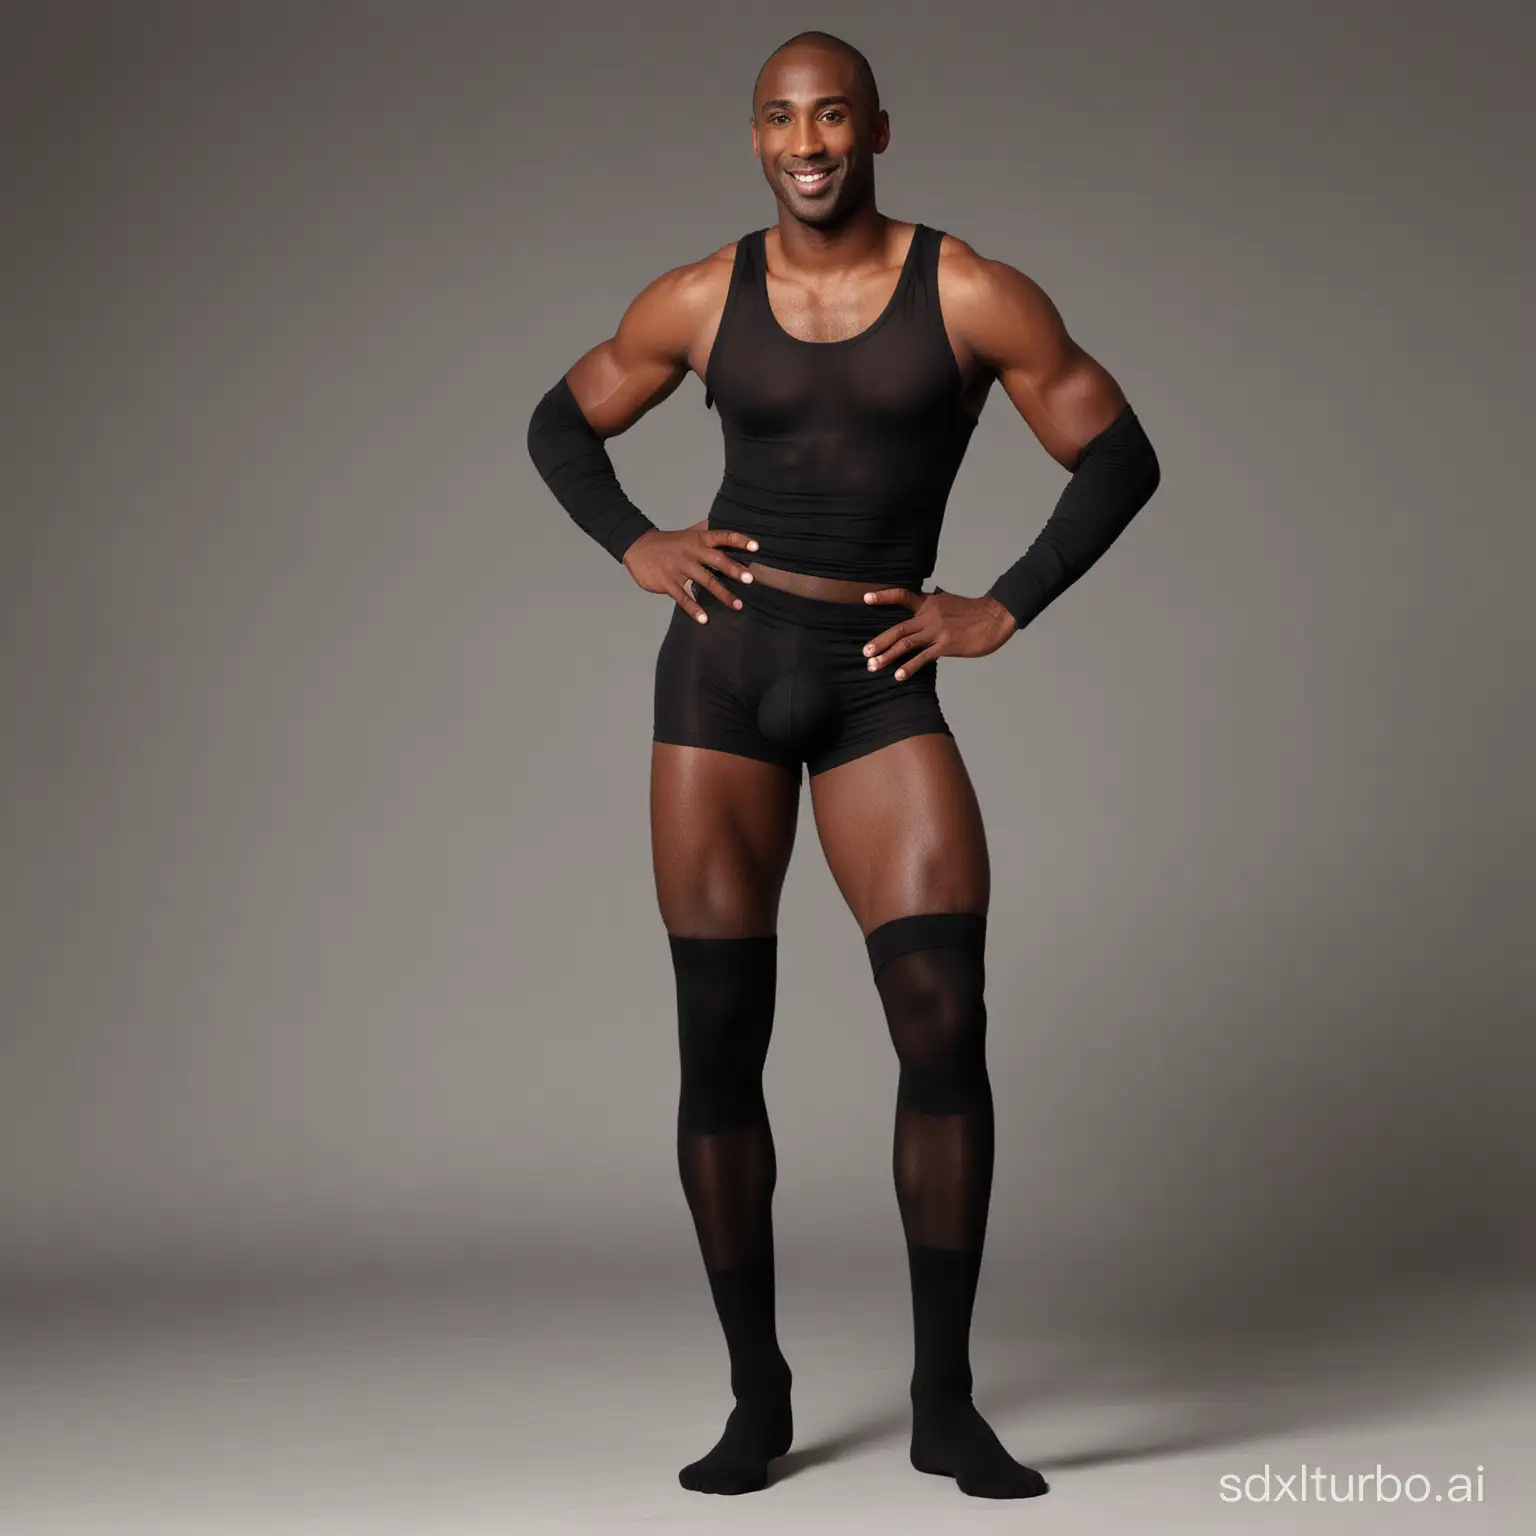 Kobe wears black stockings